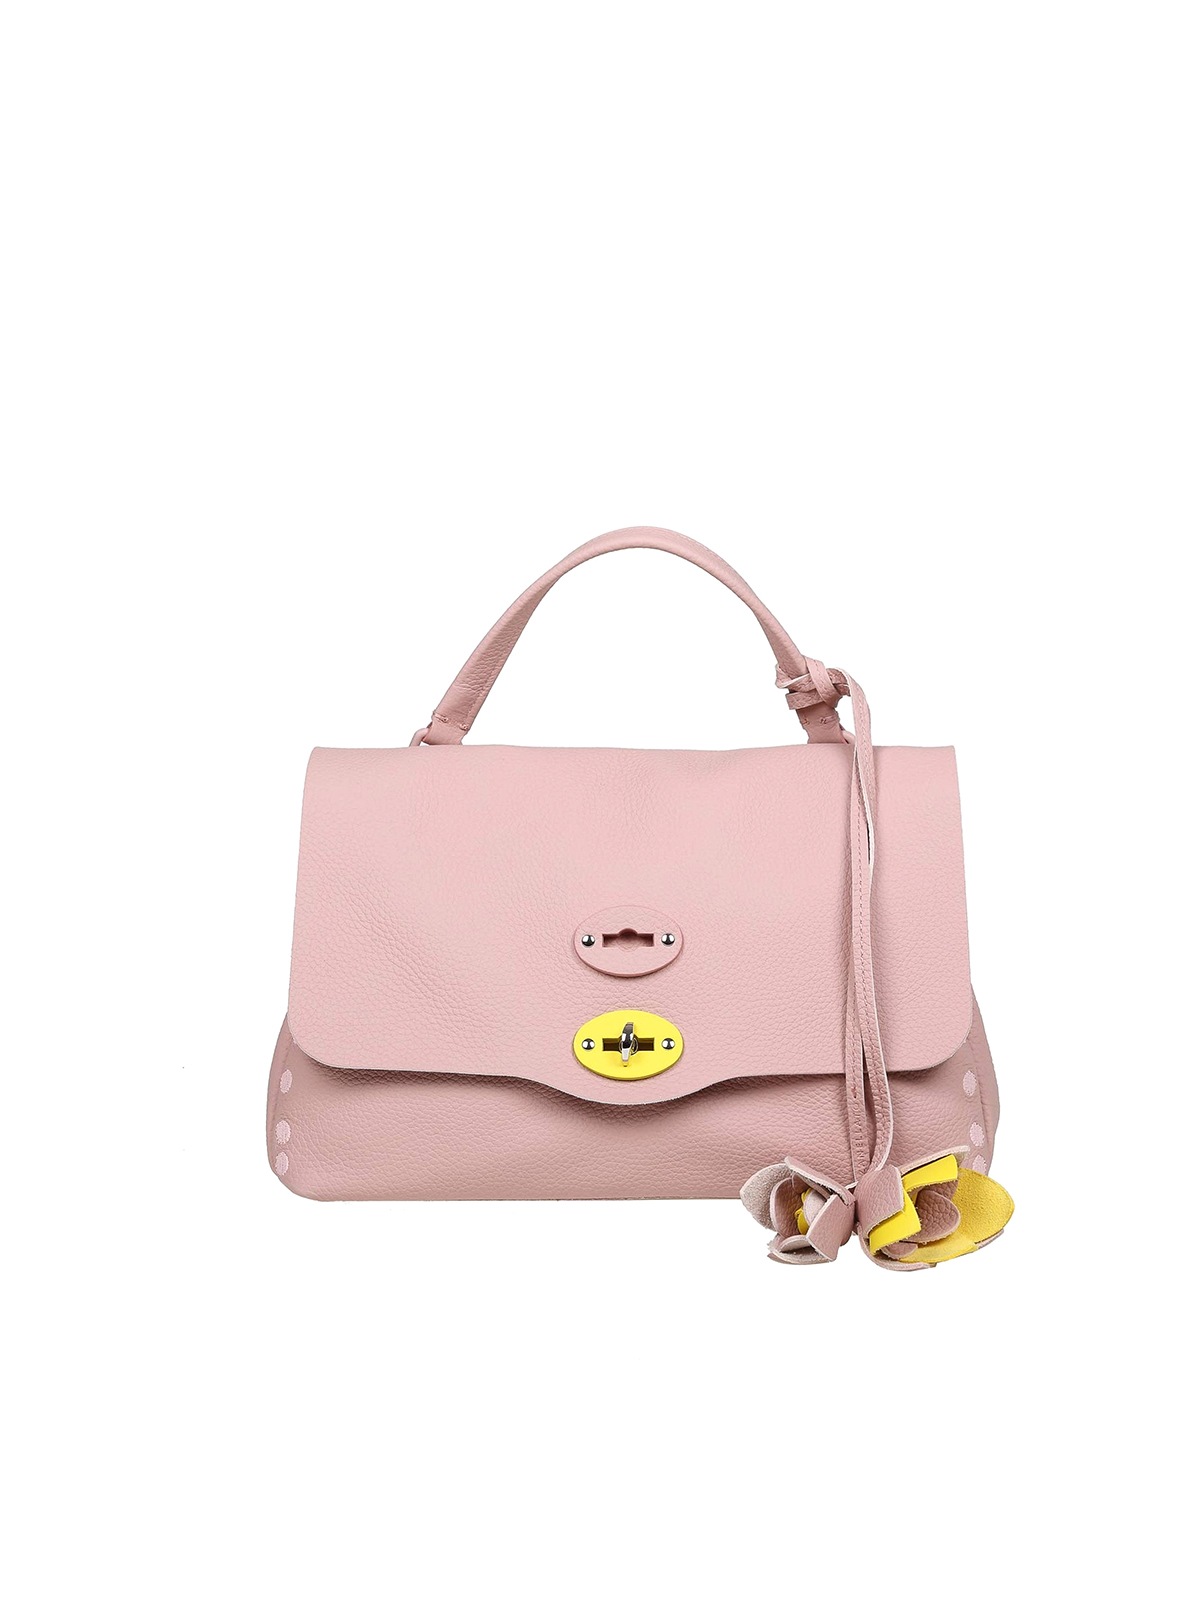 Baby Pura Handbag in Pink Womens Bags Satchel bags and purses Zanellato Leather Postina 